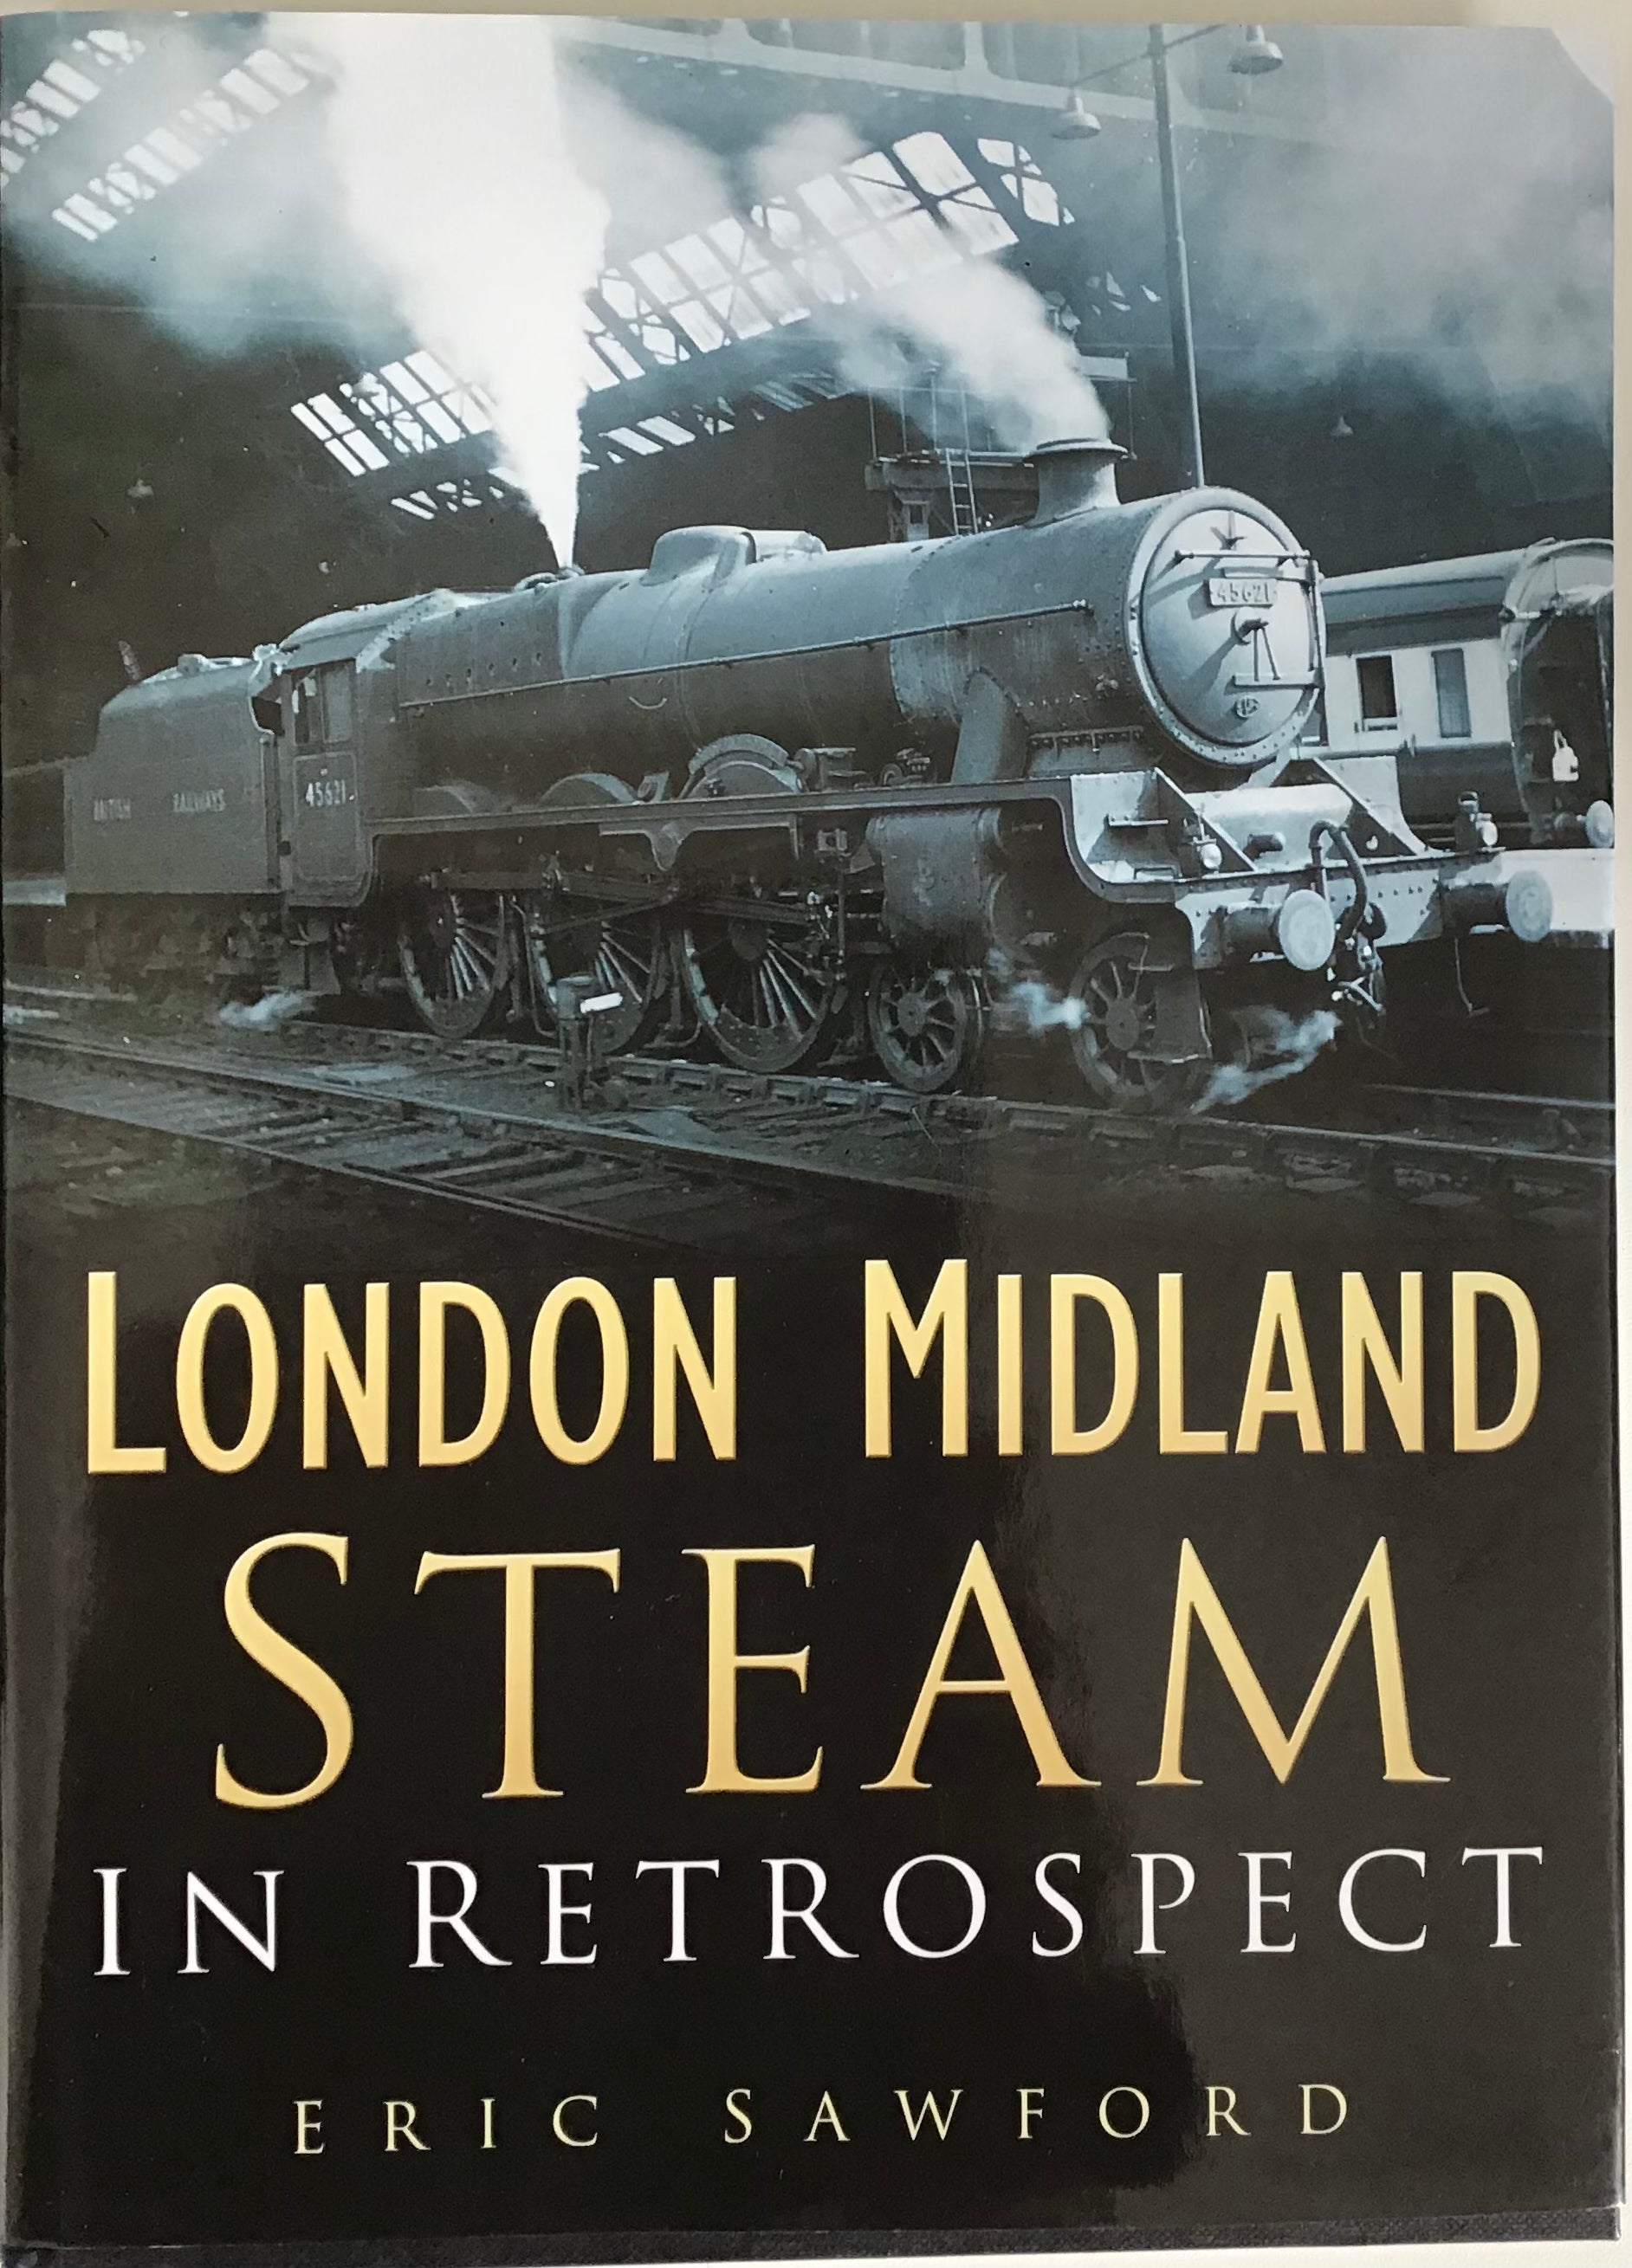 London Midland Steam in Retrospect - Eric Sawford (Sutton Publishing) - Chester Model Centre